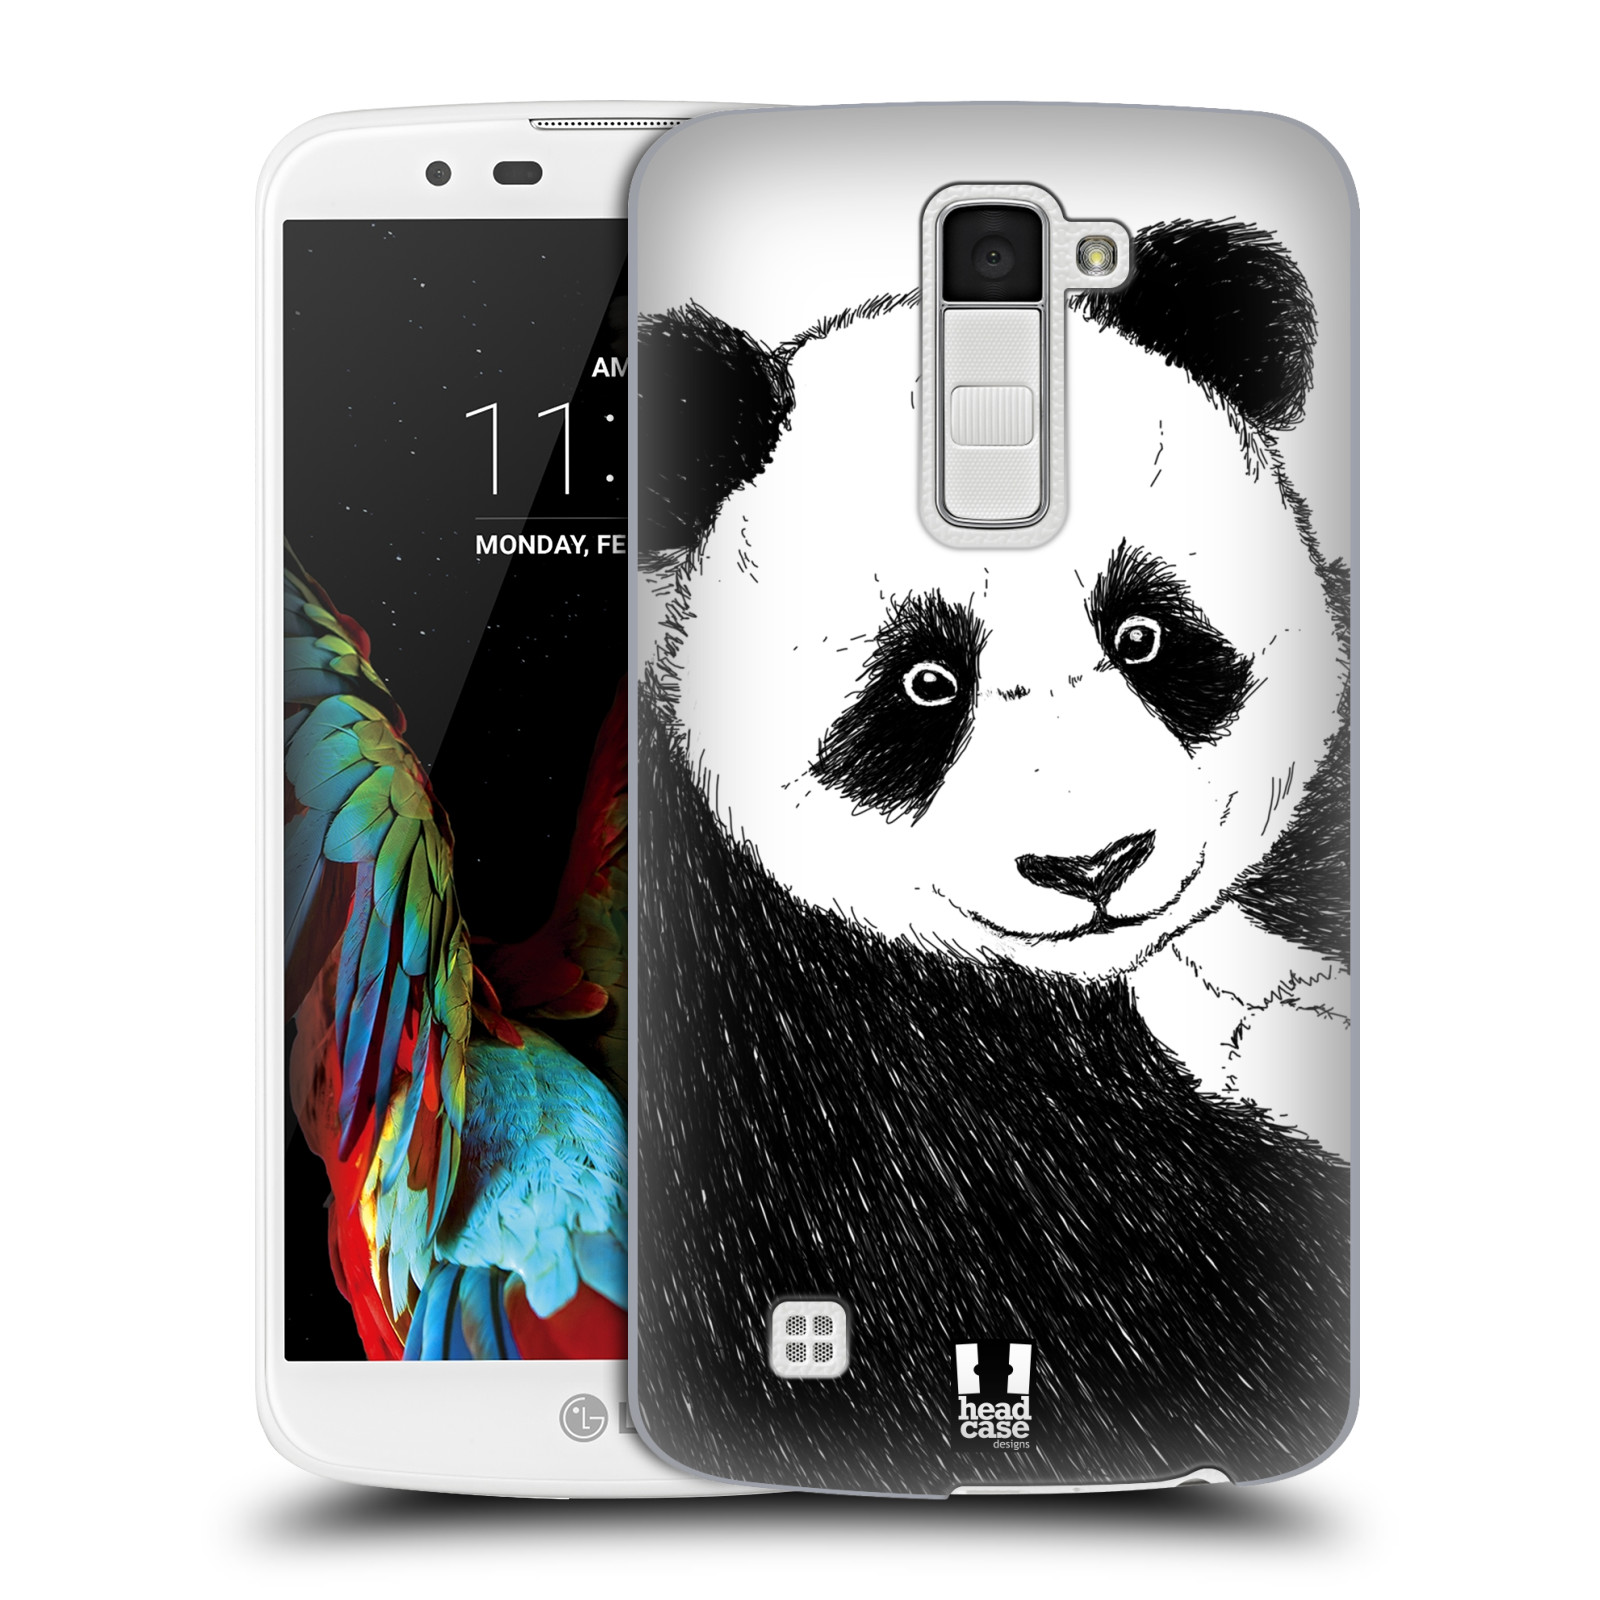 HEAD CASE plastový obal na mobil LG K10 vzor Kreslená zvířátka černá a bílá panda